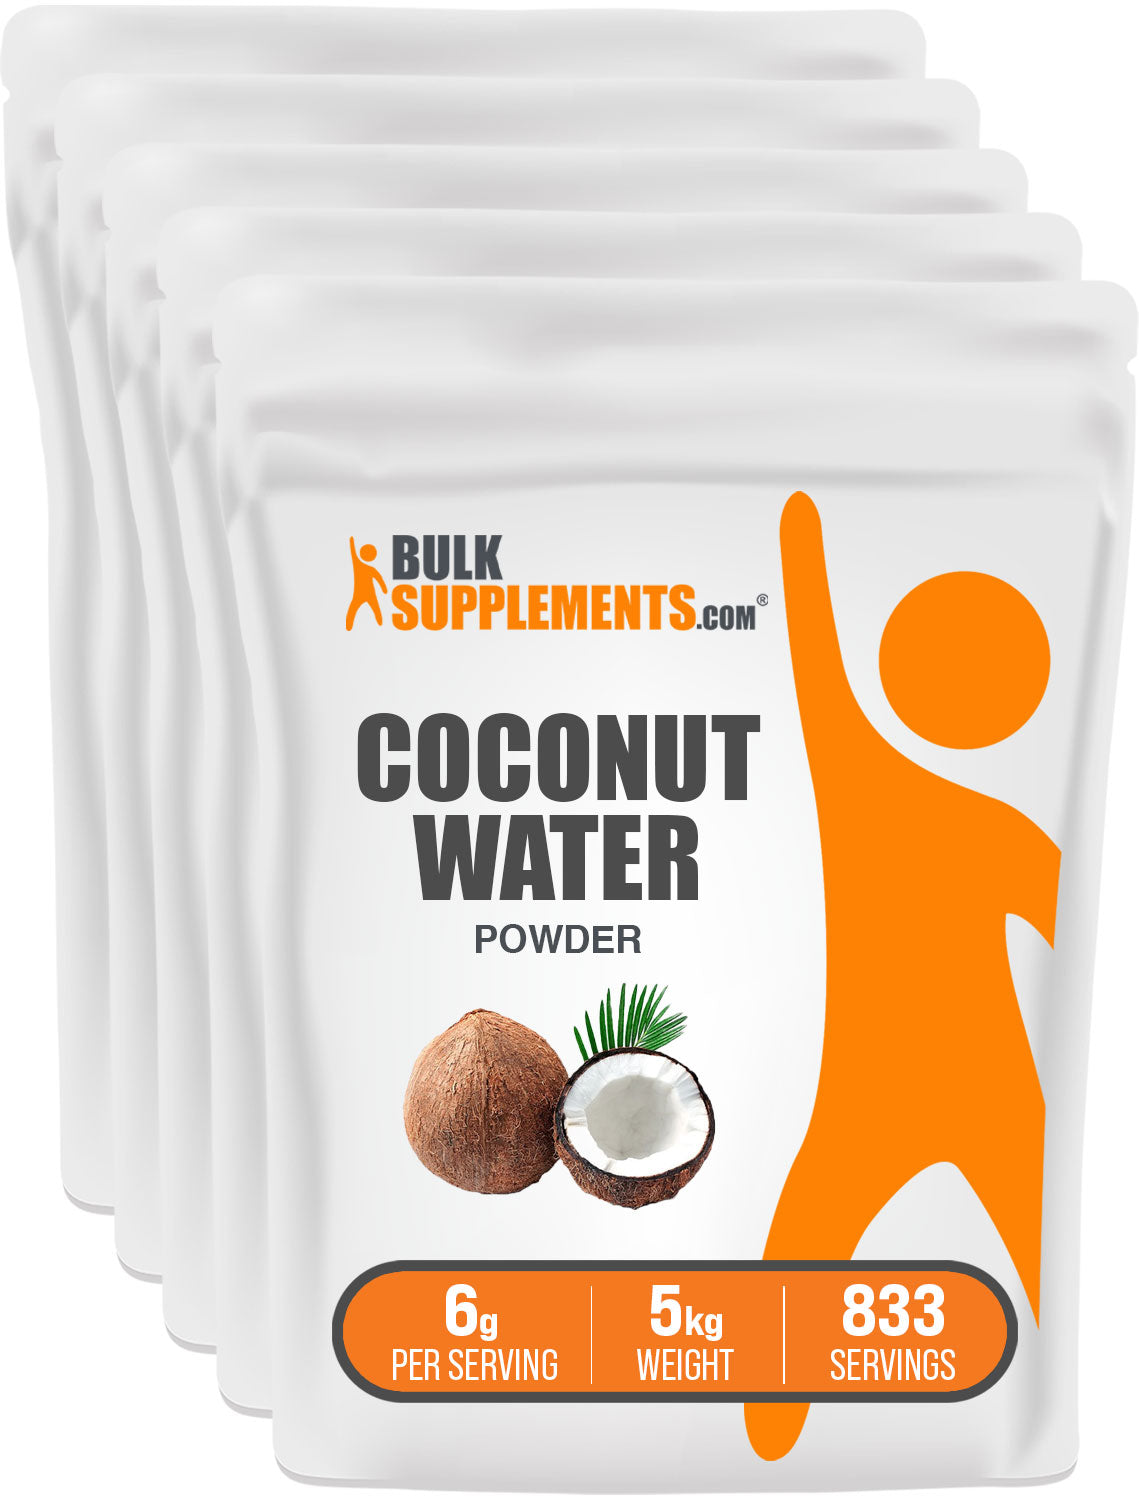 5kg bag of Coconut Powder